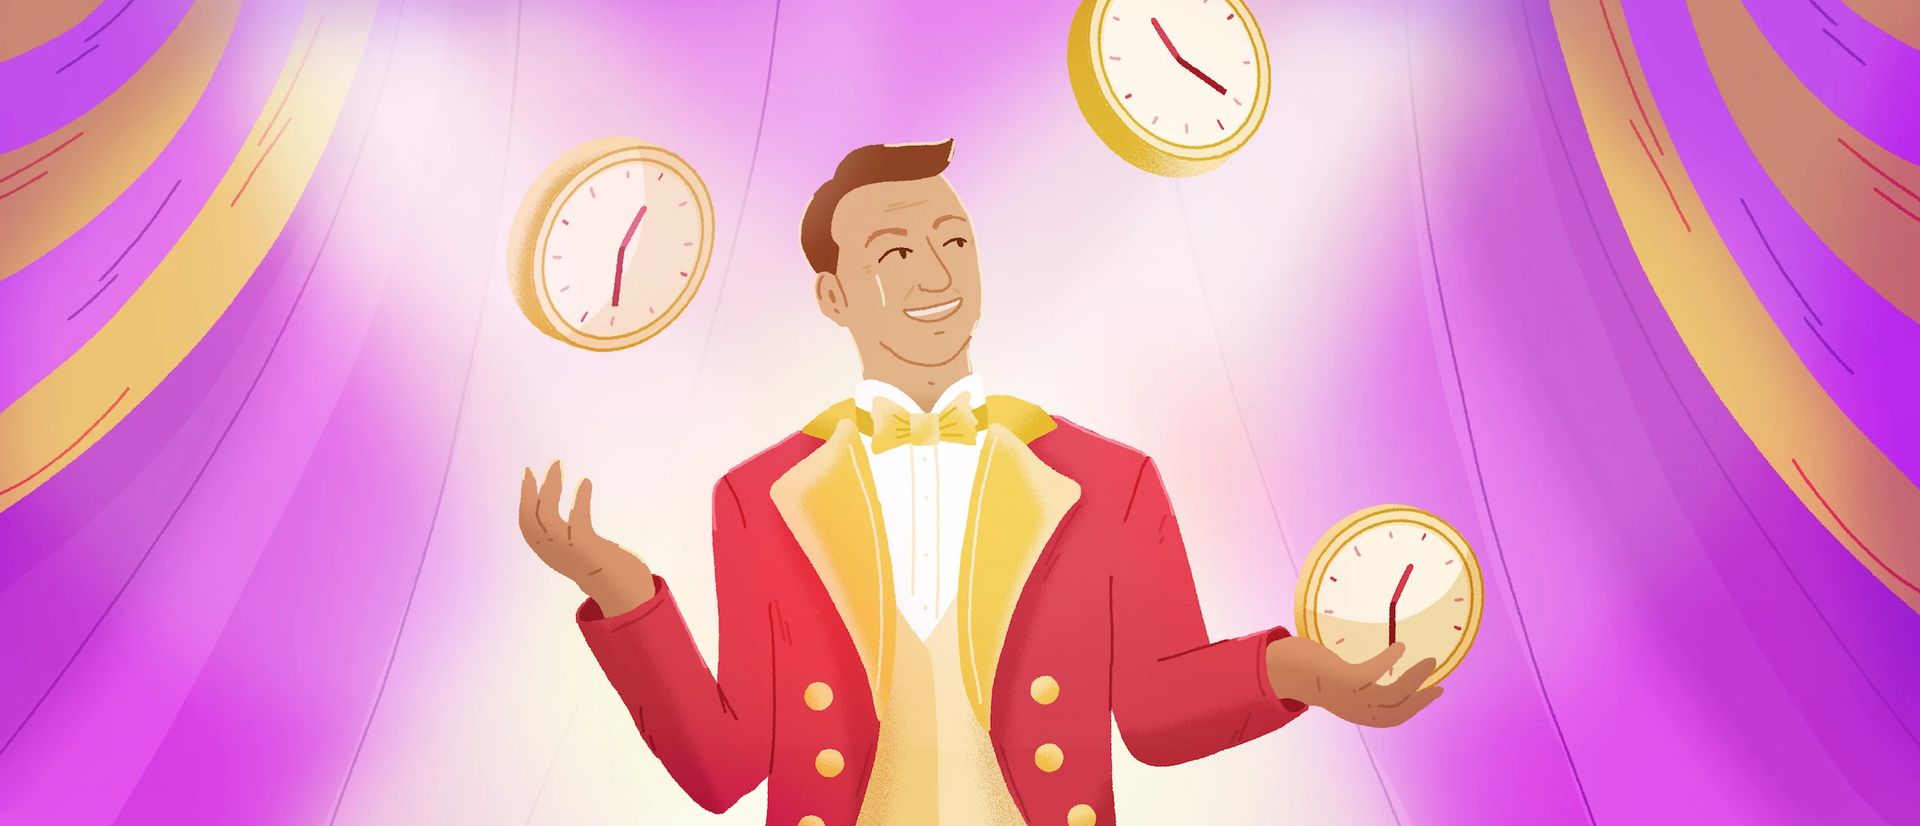 Homme en habit de cirque qui jongle avec des horloges